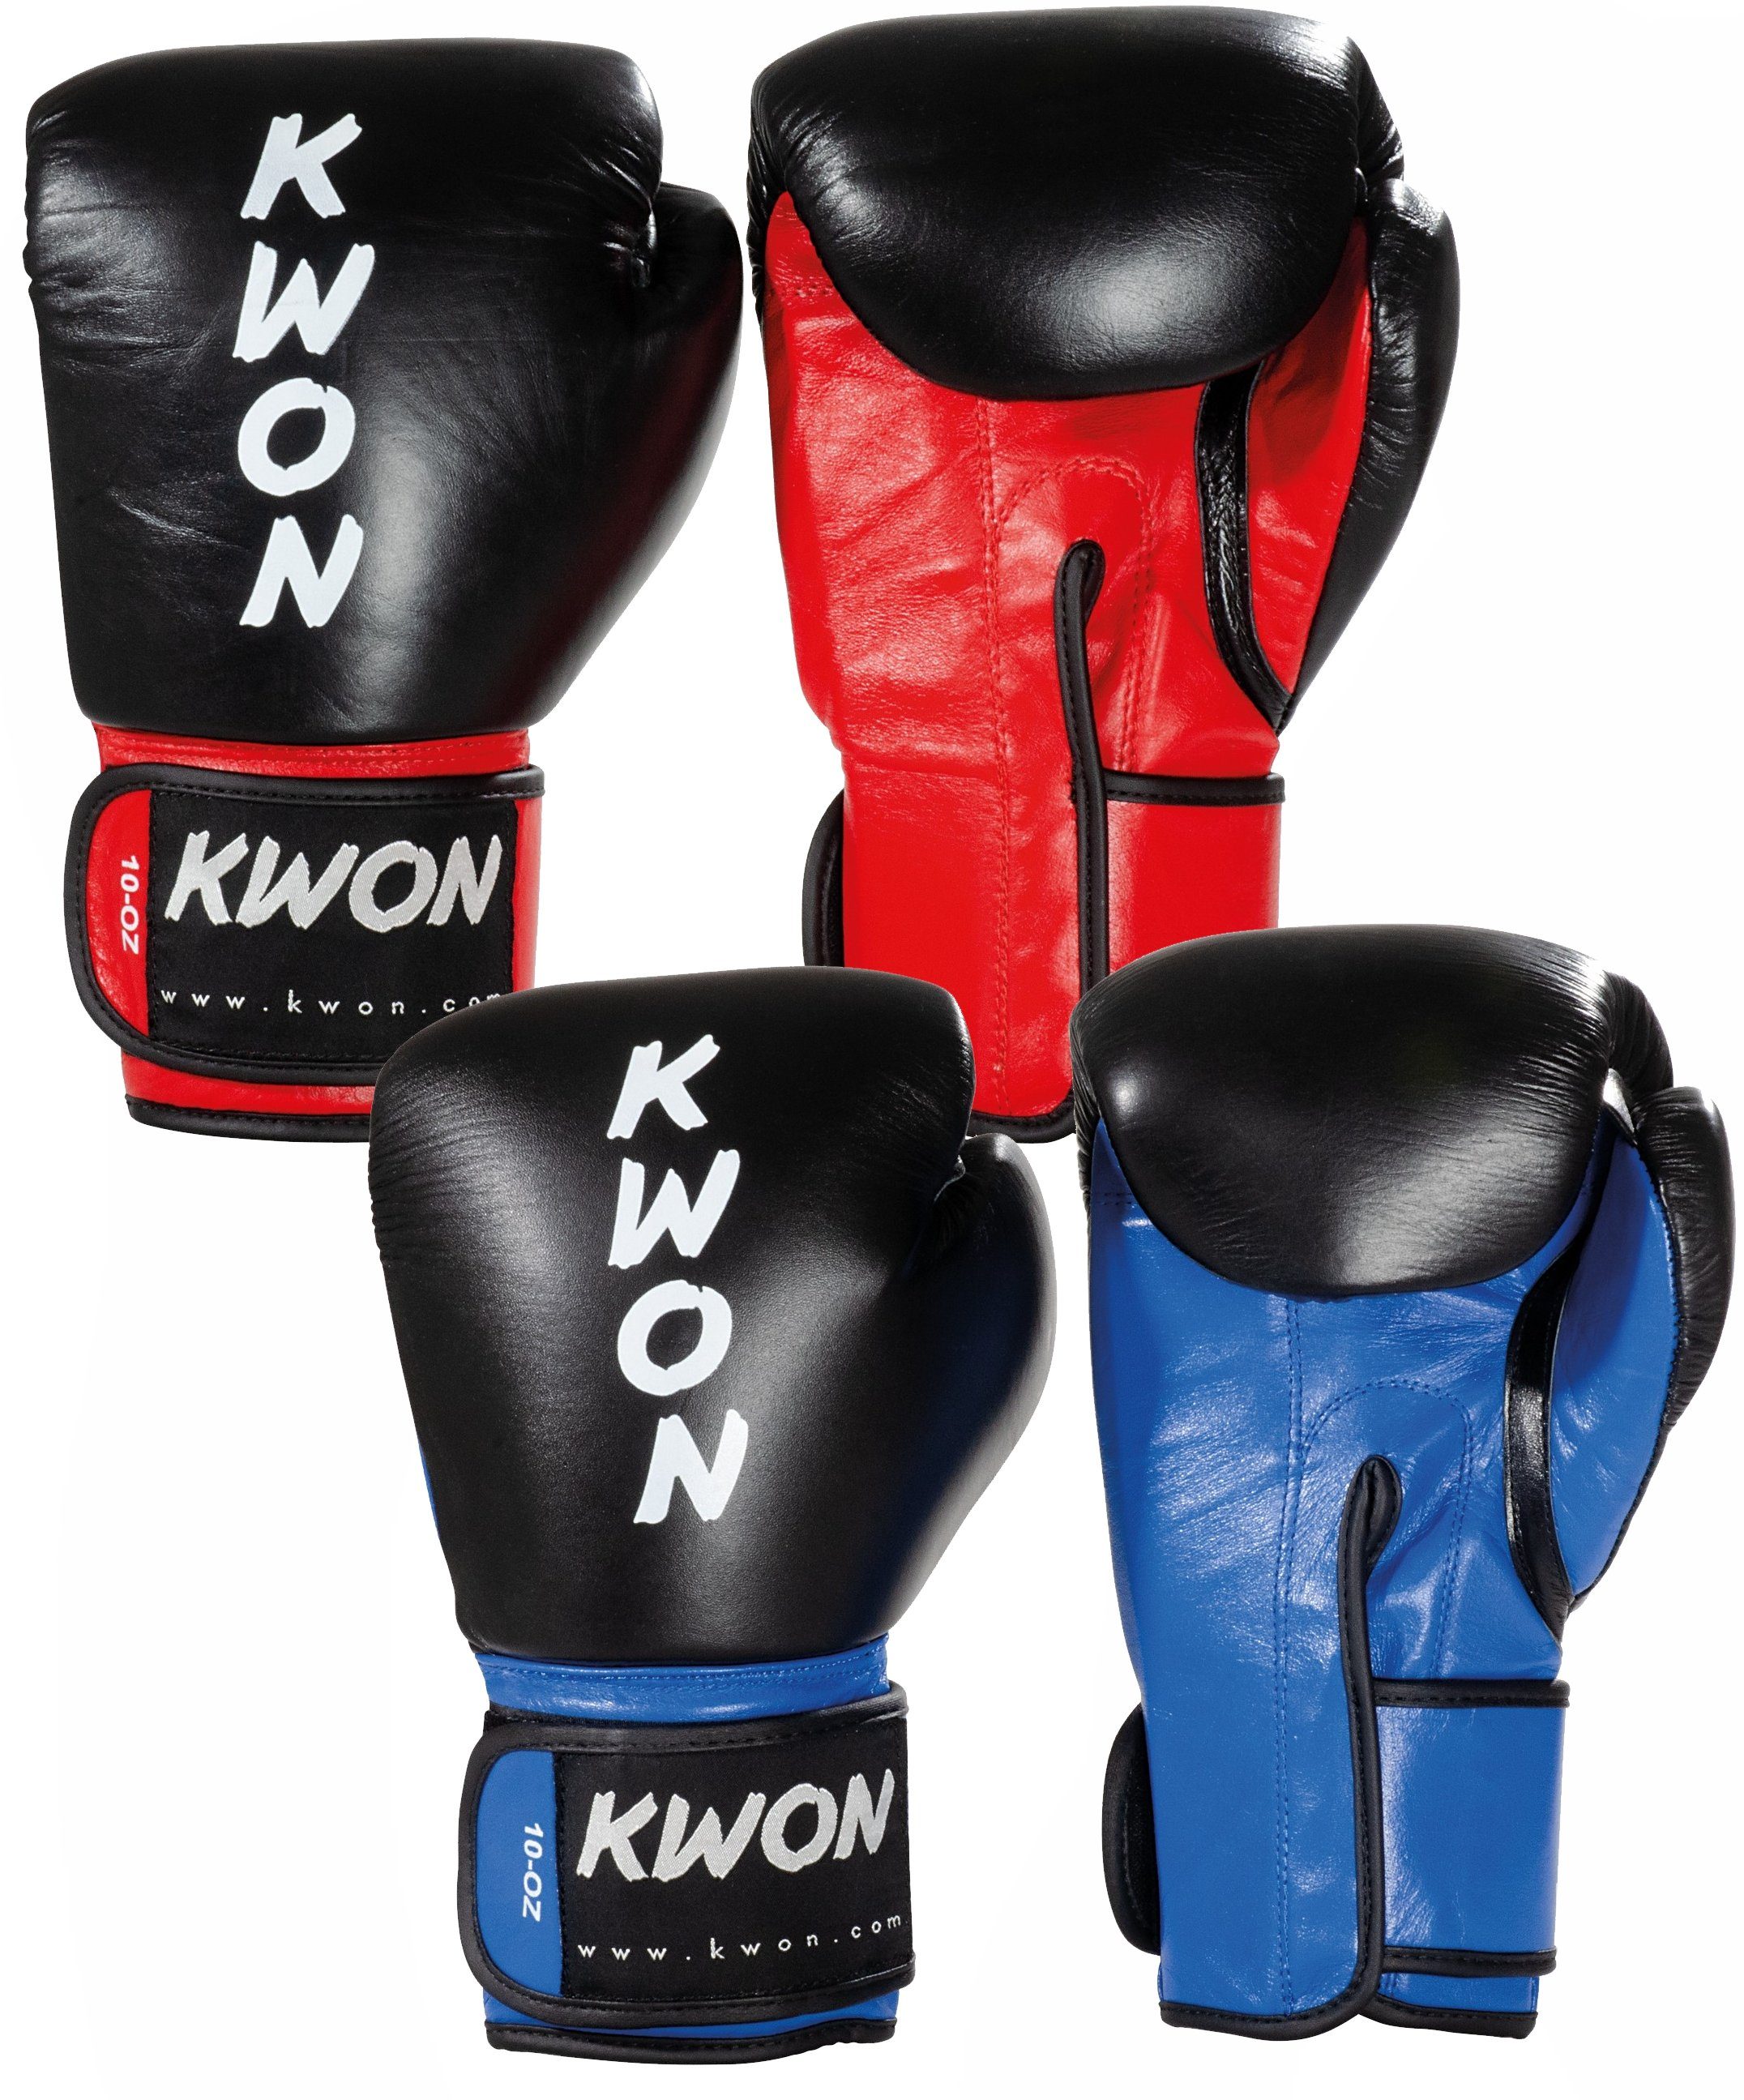 KWON Boxhandschuhe Profi KO Champ Leder Box-Handschuhe Boxen Kickboxen Thaiboxen (Vollkontakt, Paar), Ergo Form, Profi Ausführung, Echtes Leder, WKU anerkannt schwarz/rot